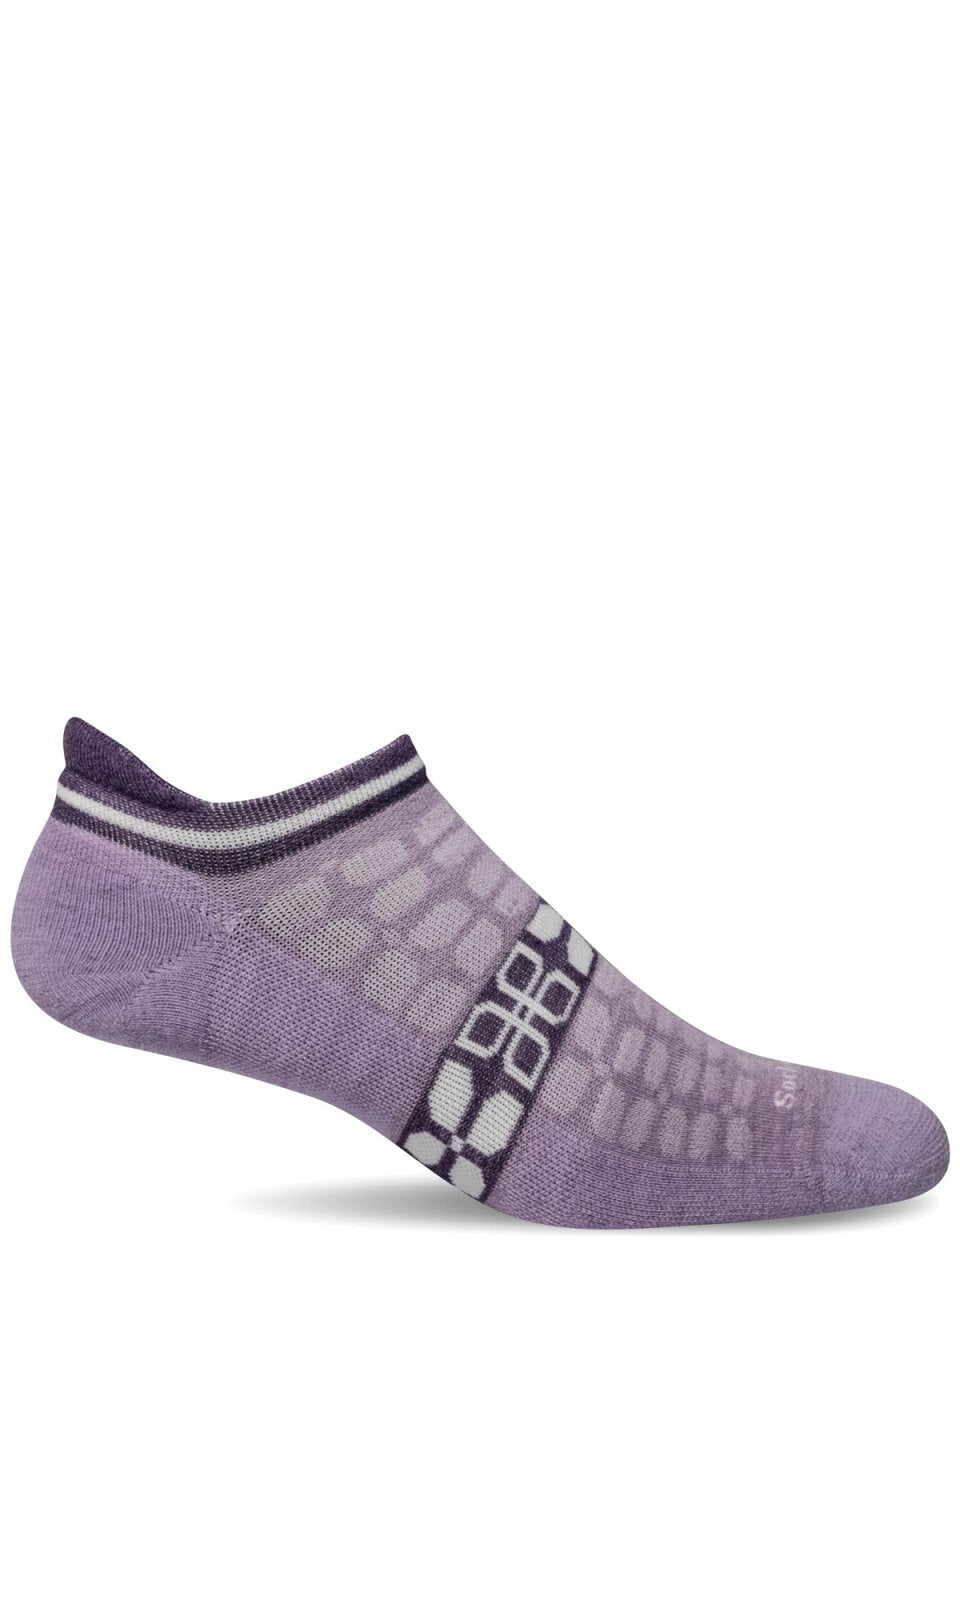 Sockwell Boost Micro Firm Compression Socks (Women's)